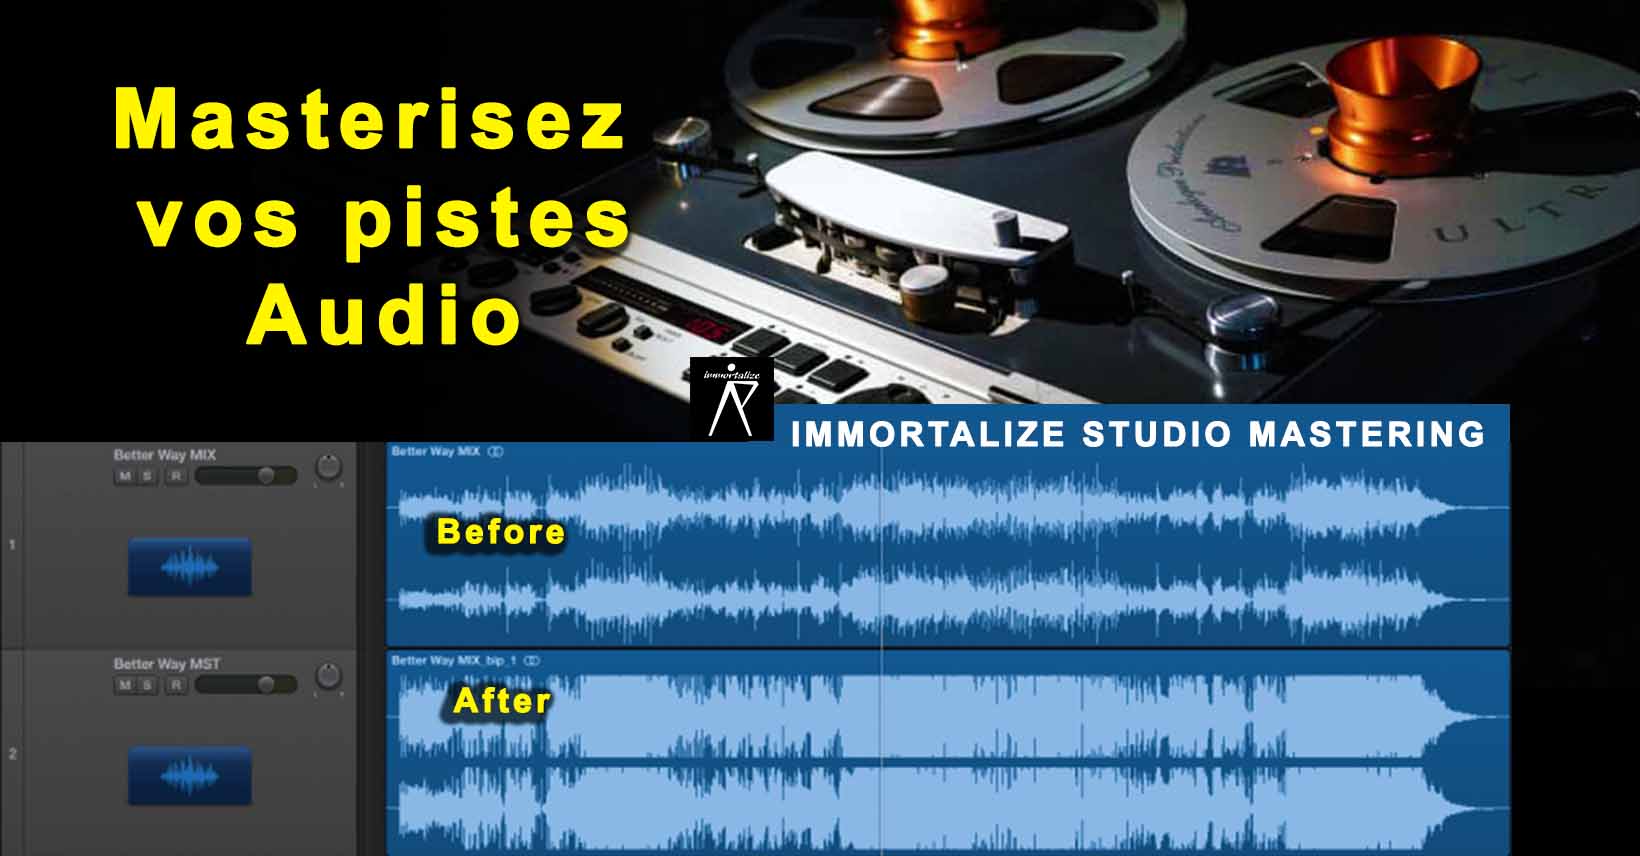 comment masterirer sa musique, mastering studio professionnel au cameroun, masterisez vos pistes audio